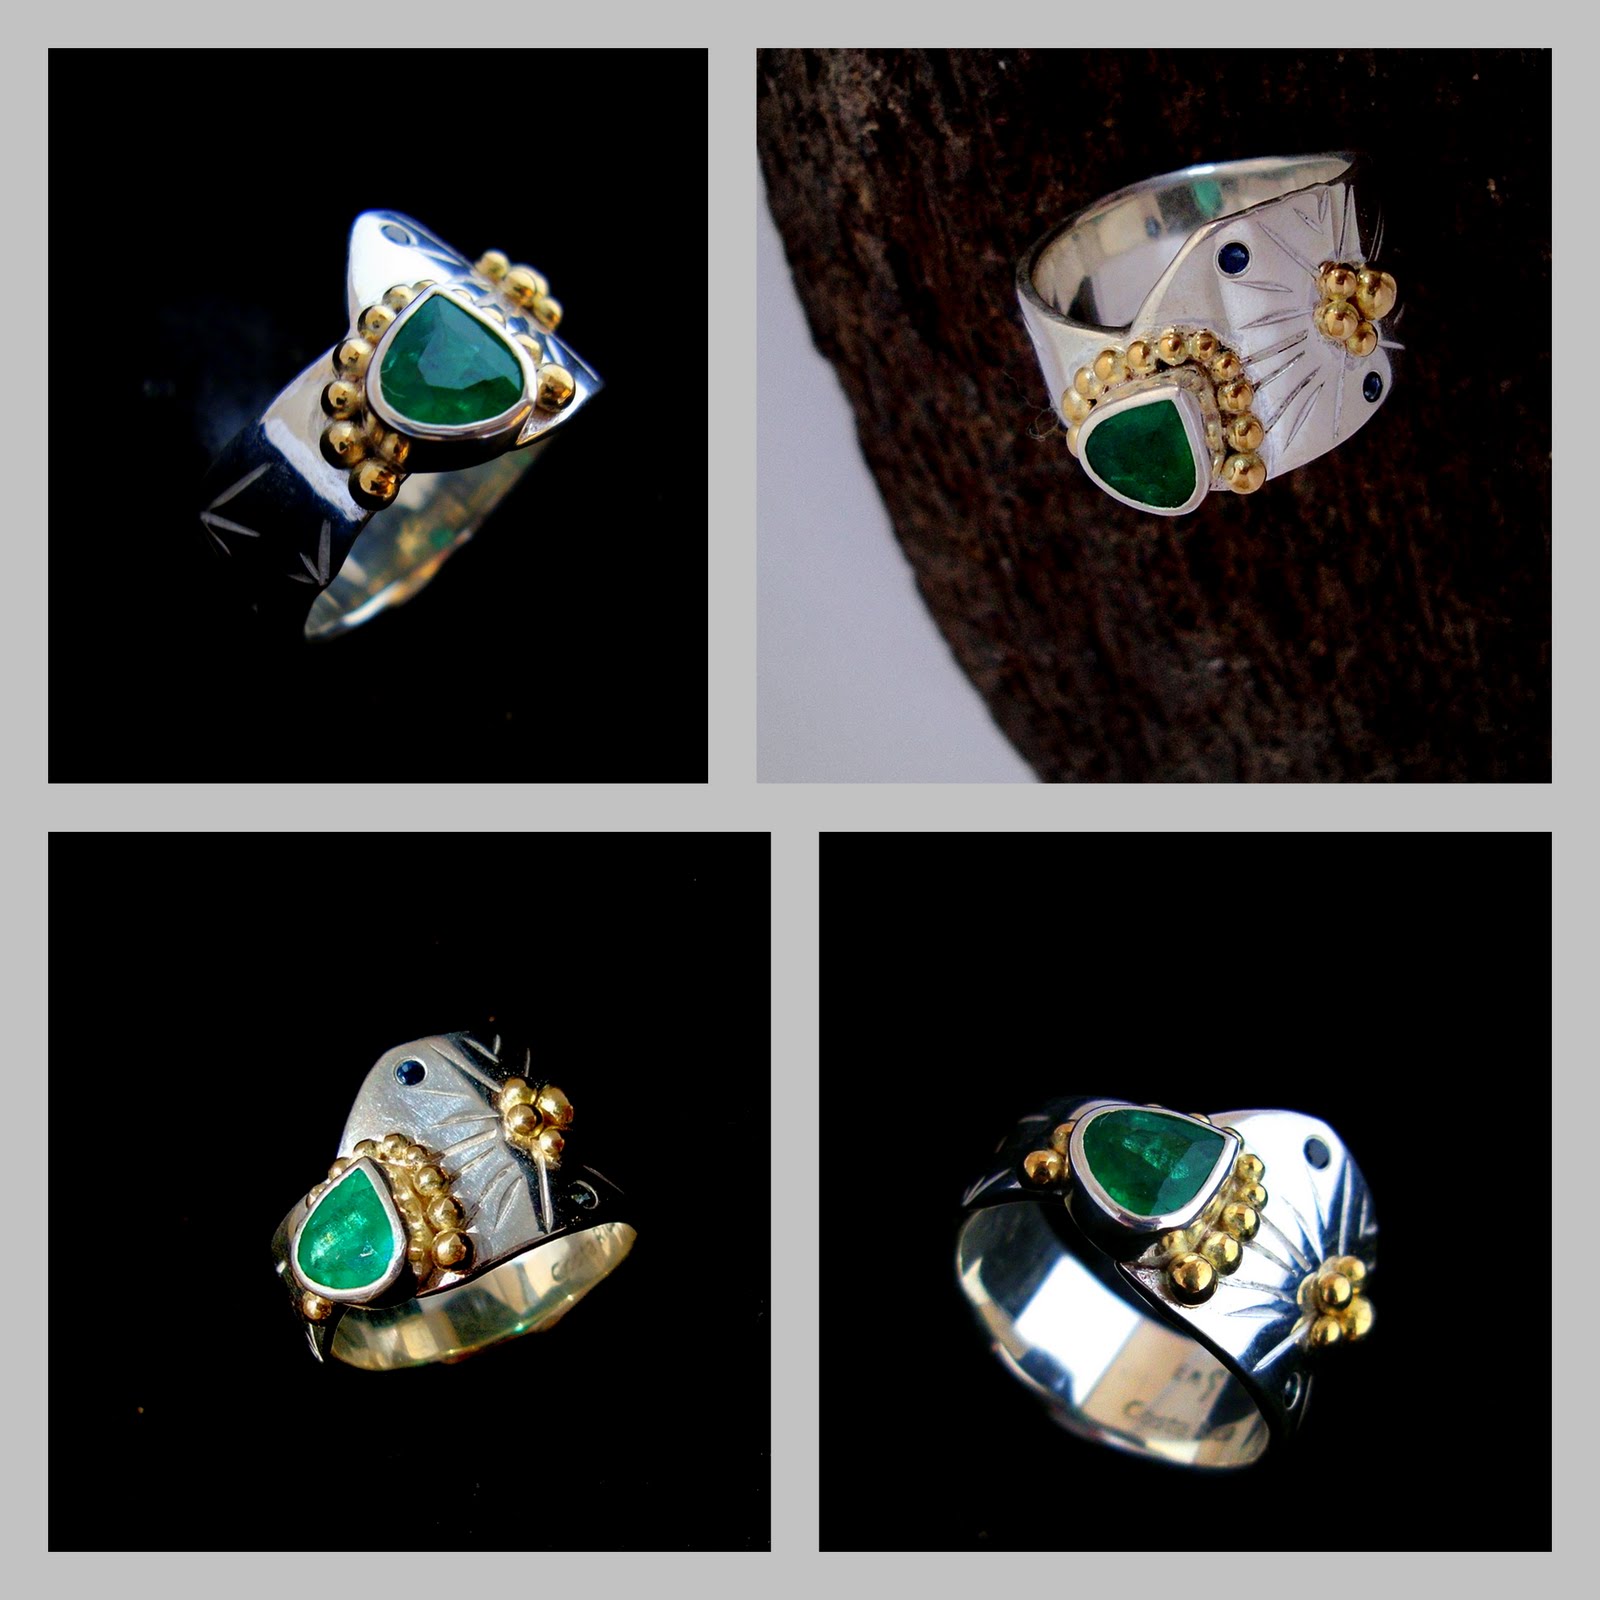 EK Art Jewelry Tamarindo Costa Rica: Precious and semiprecious... very ...